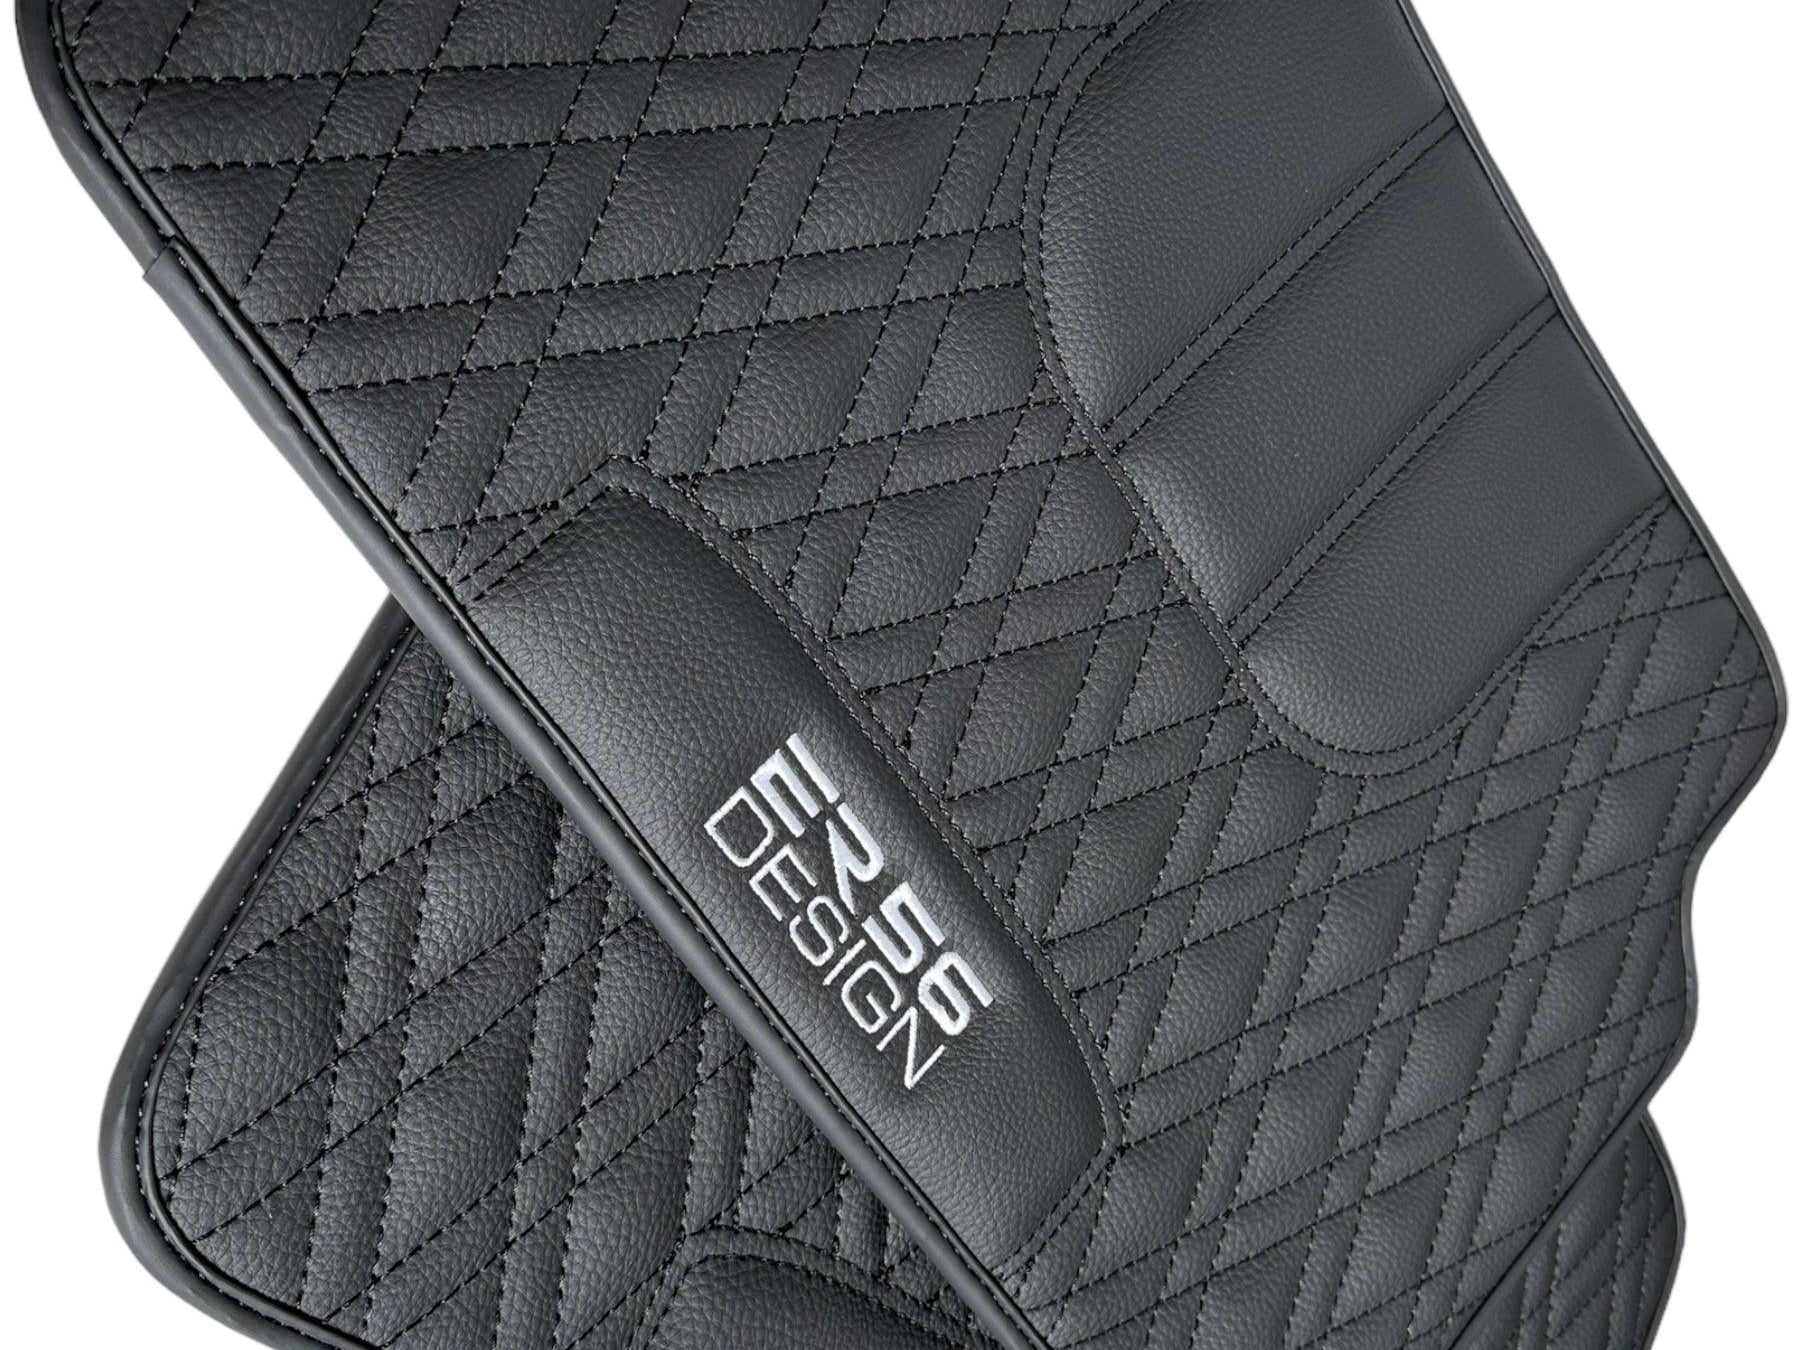 Floor Mats For BMW 5 Series E28 Sedan Black Leather Er56 Design - AutoWin